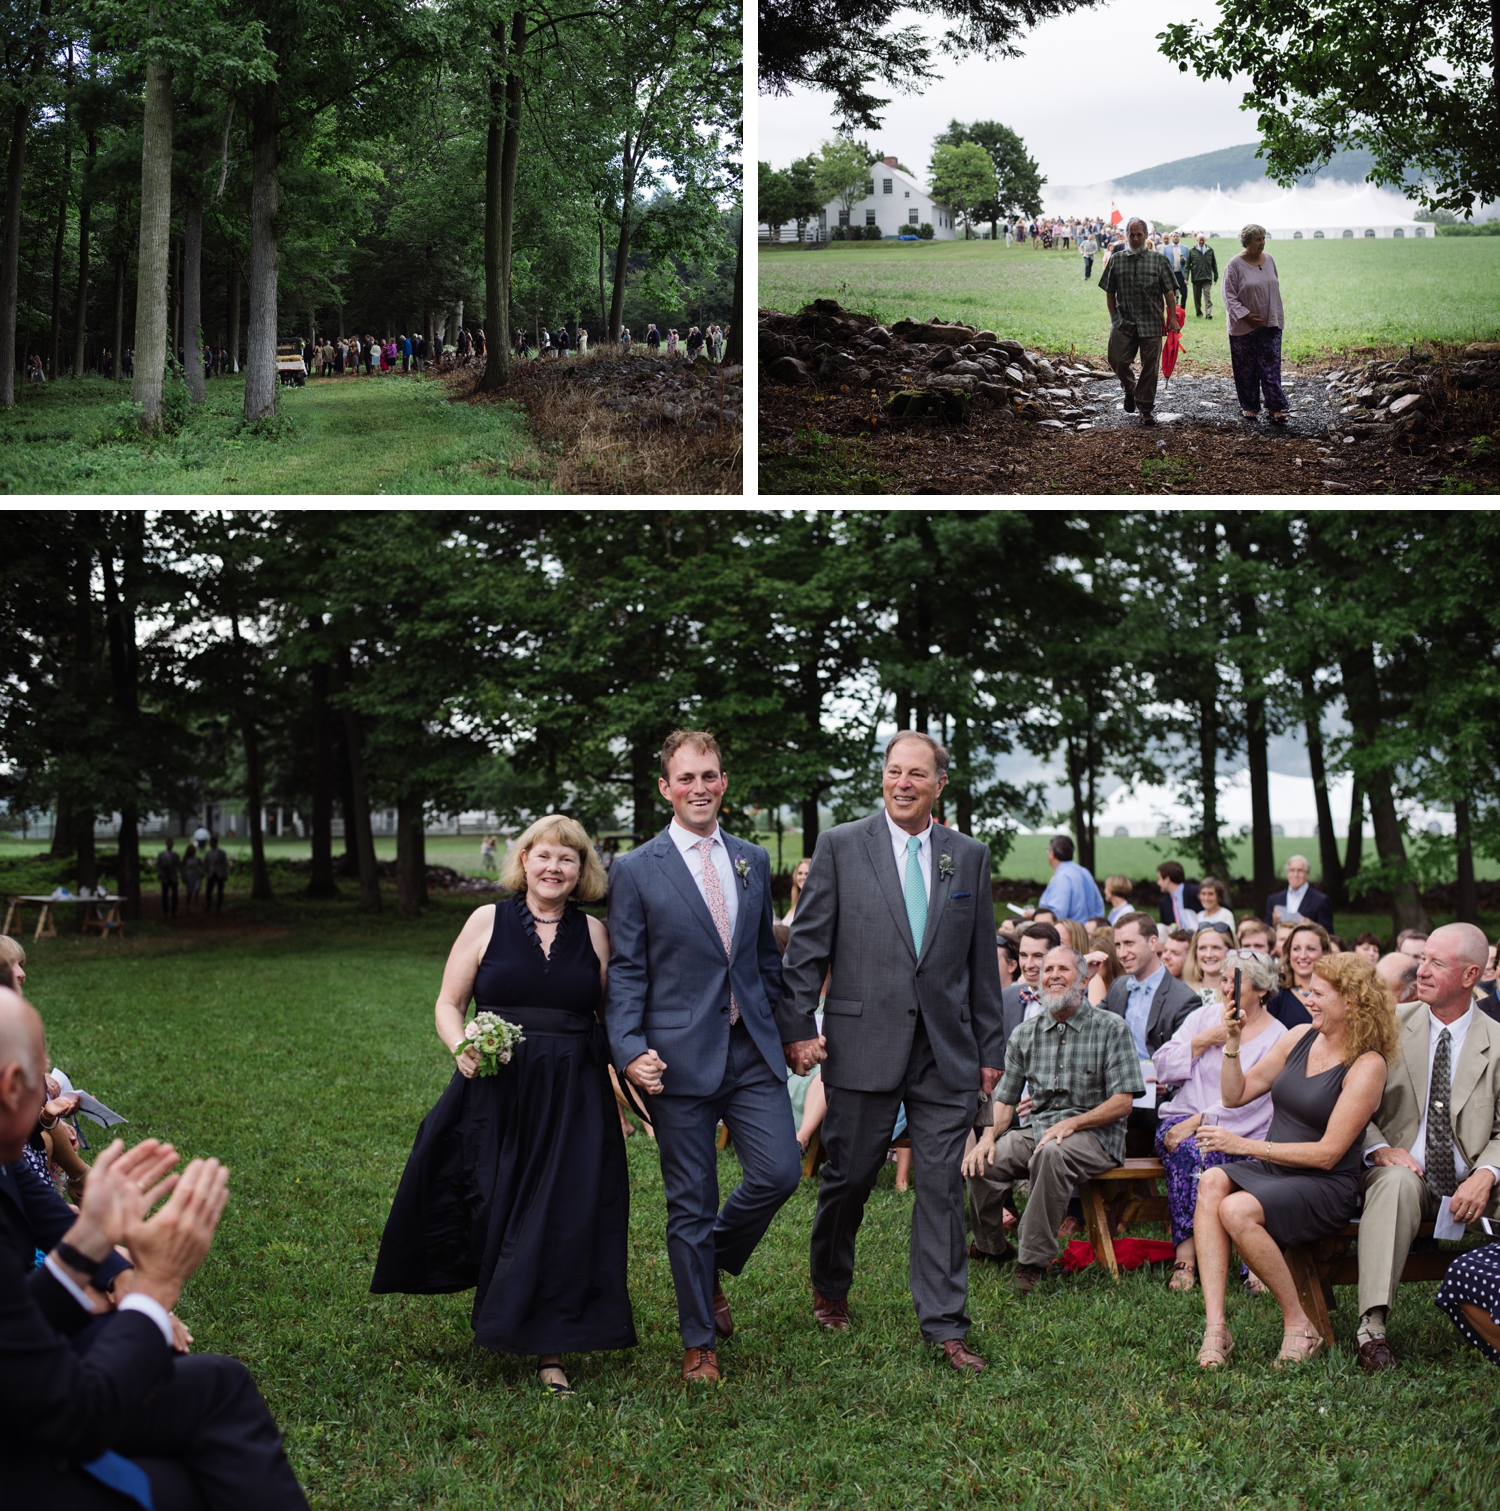 Outdoor wedding ceremony in New Haven, Vermont